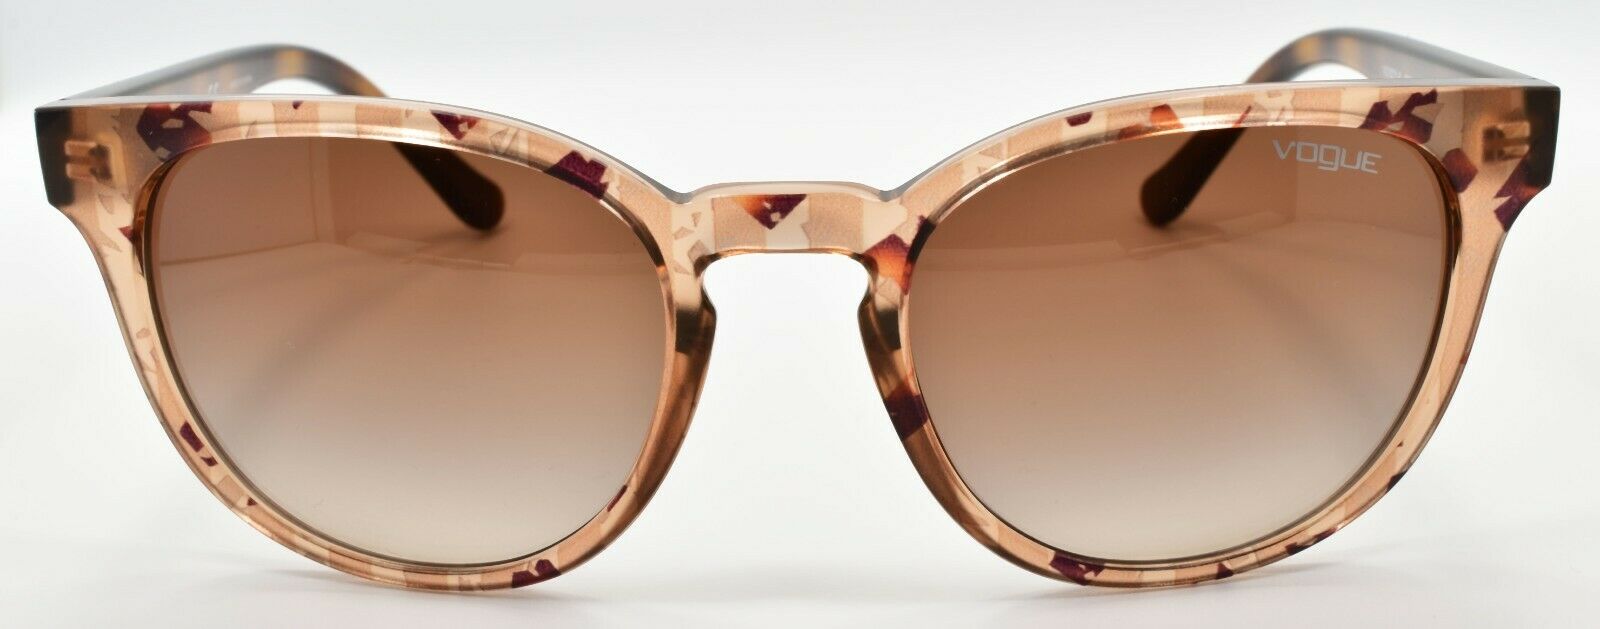 2-Vogue VO5271-S 272813 Women's Sunglasses Brown Beige Textured / Brown Gradient-8056597067348-IKSpecs